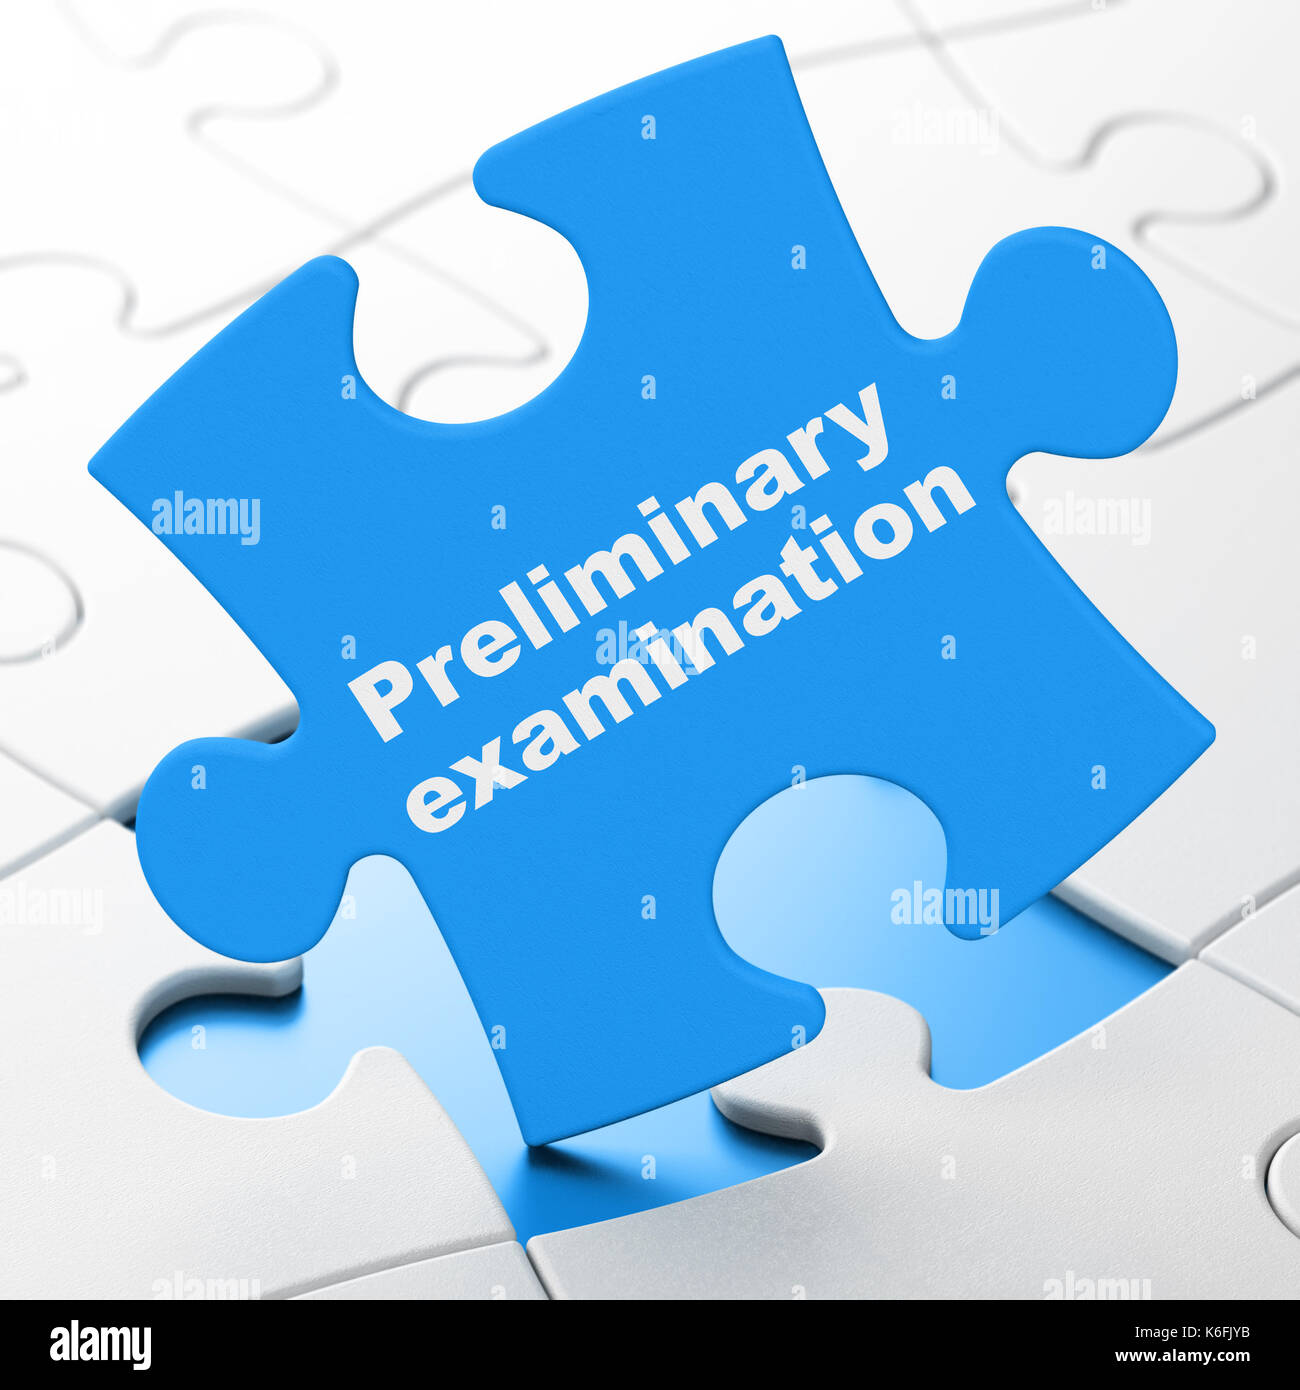 Education concept: Preliminary Examination on puzzle background Stock Photo